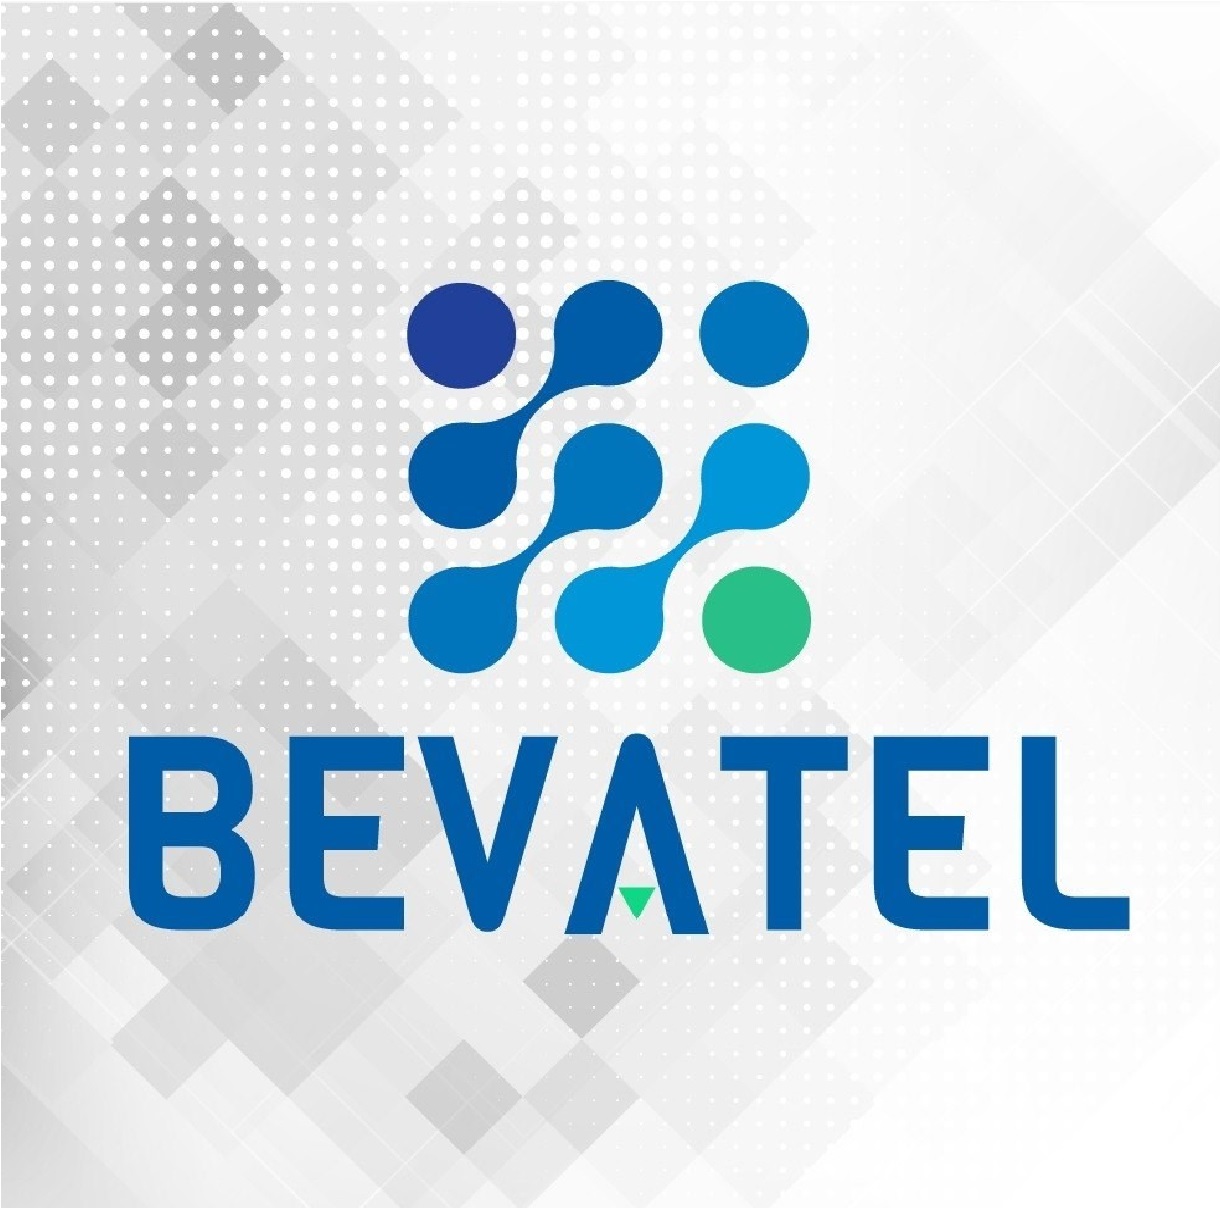 Bevatel Company